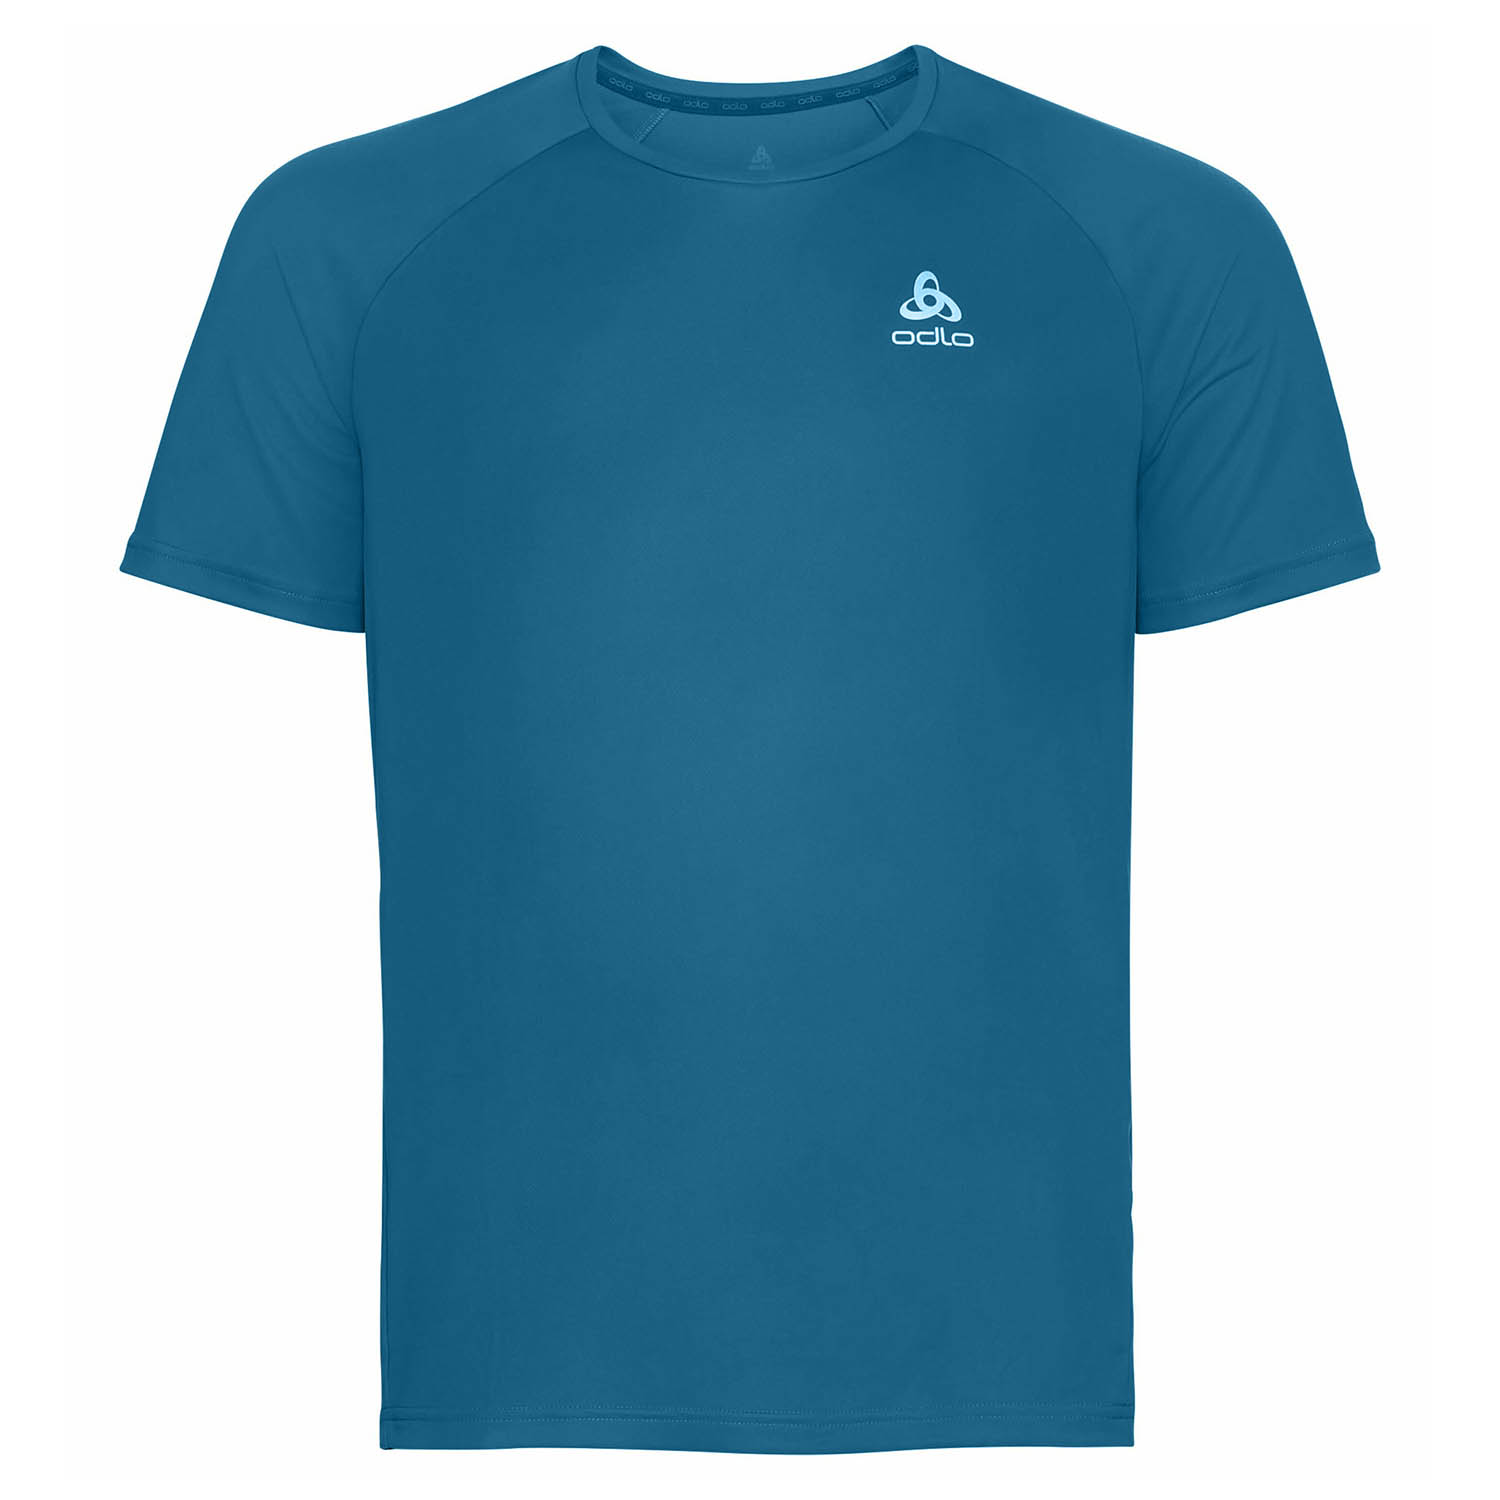 Odlo Crew Essential Chill-Tec T-Shirt - Saxony Blue